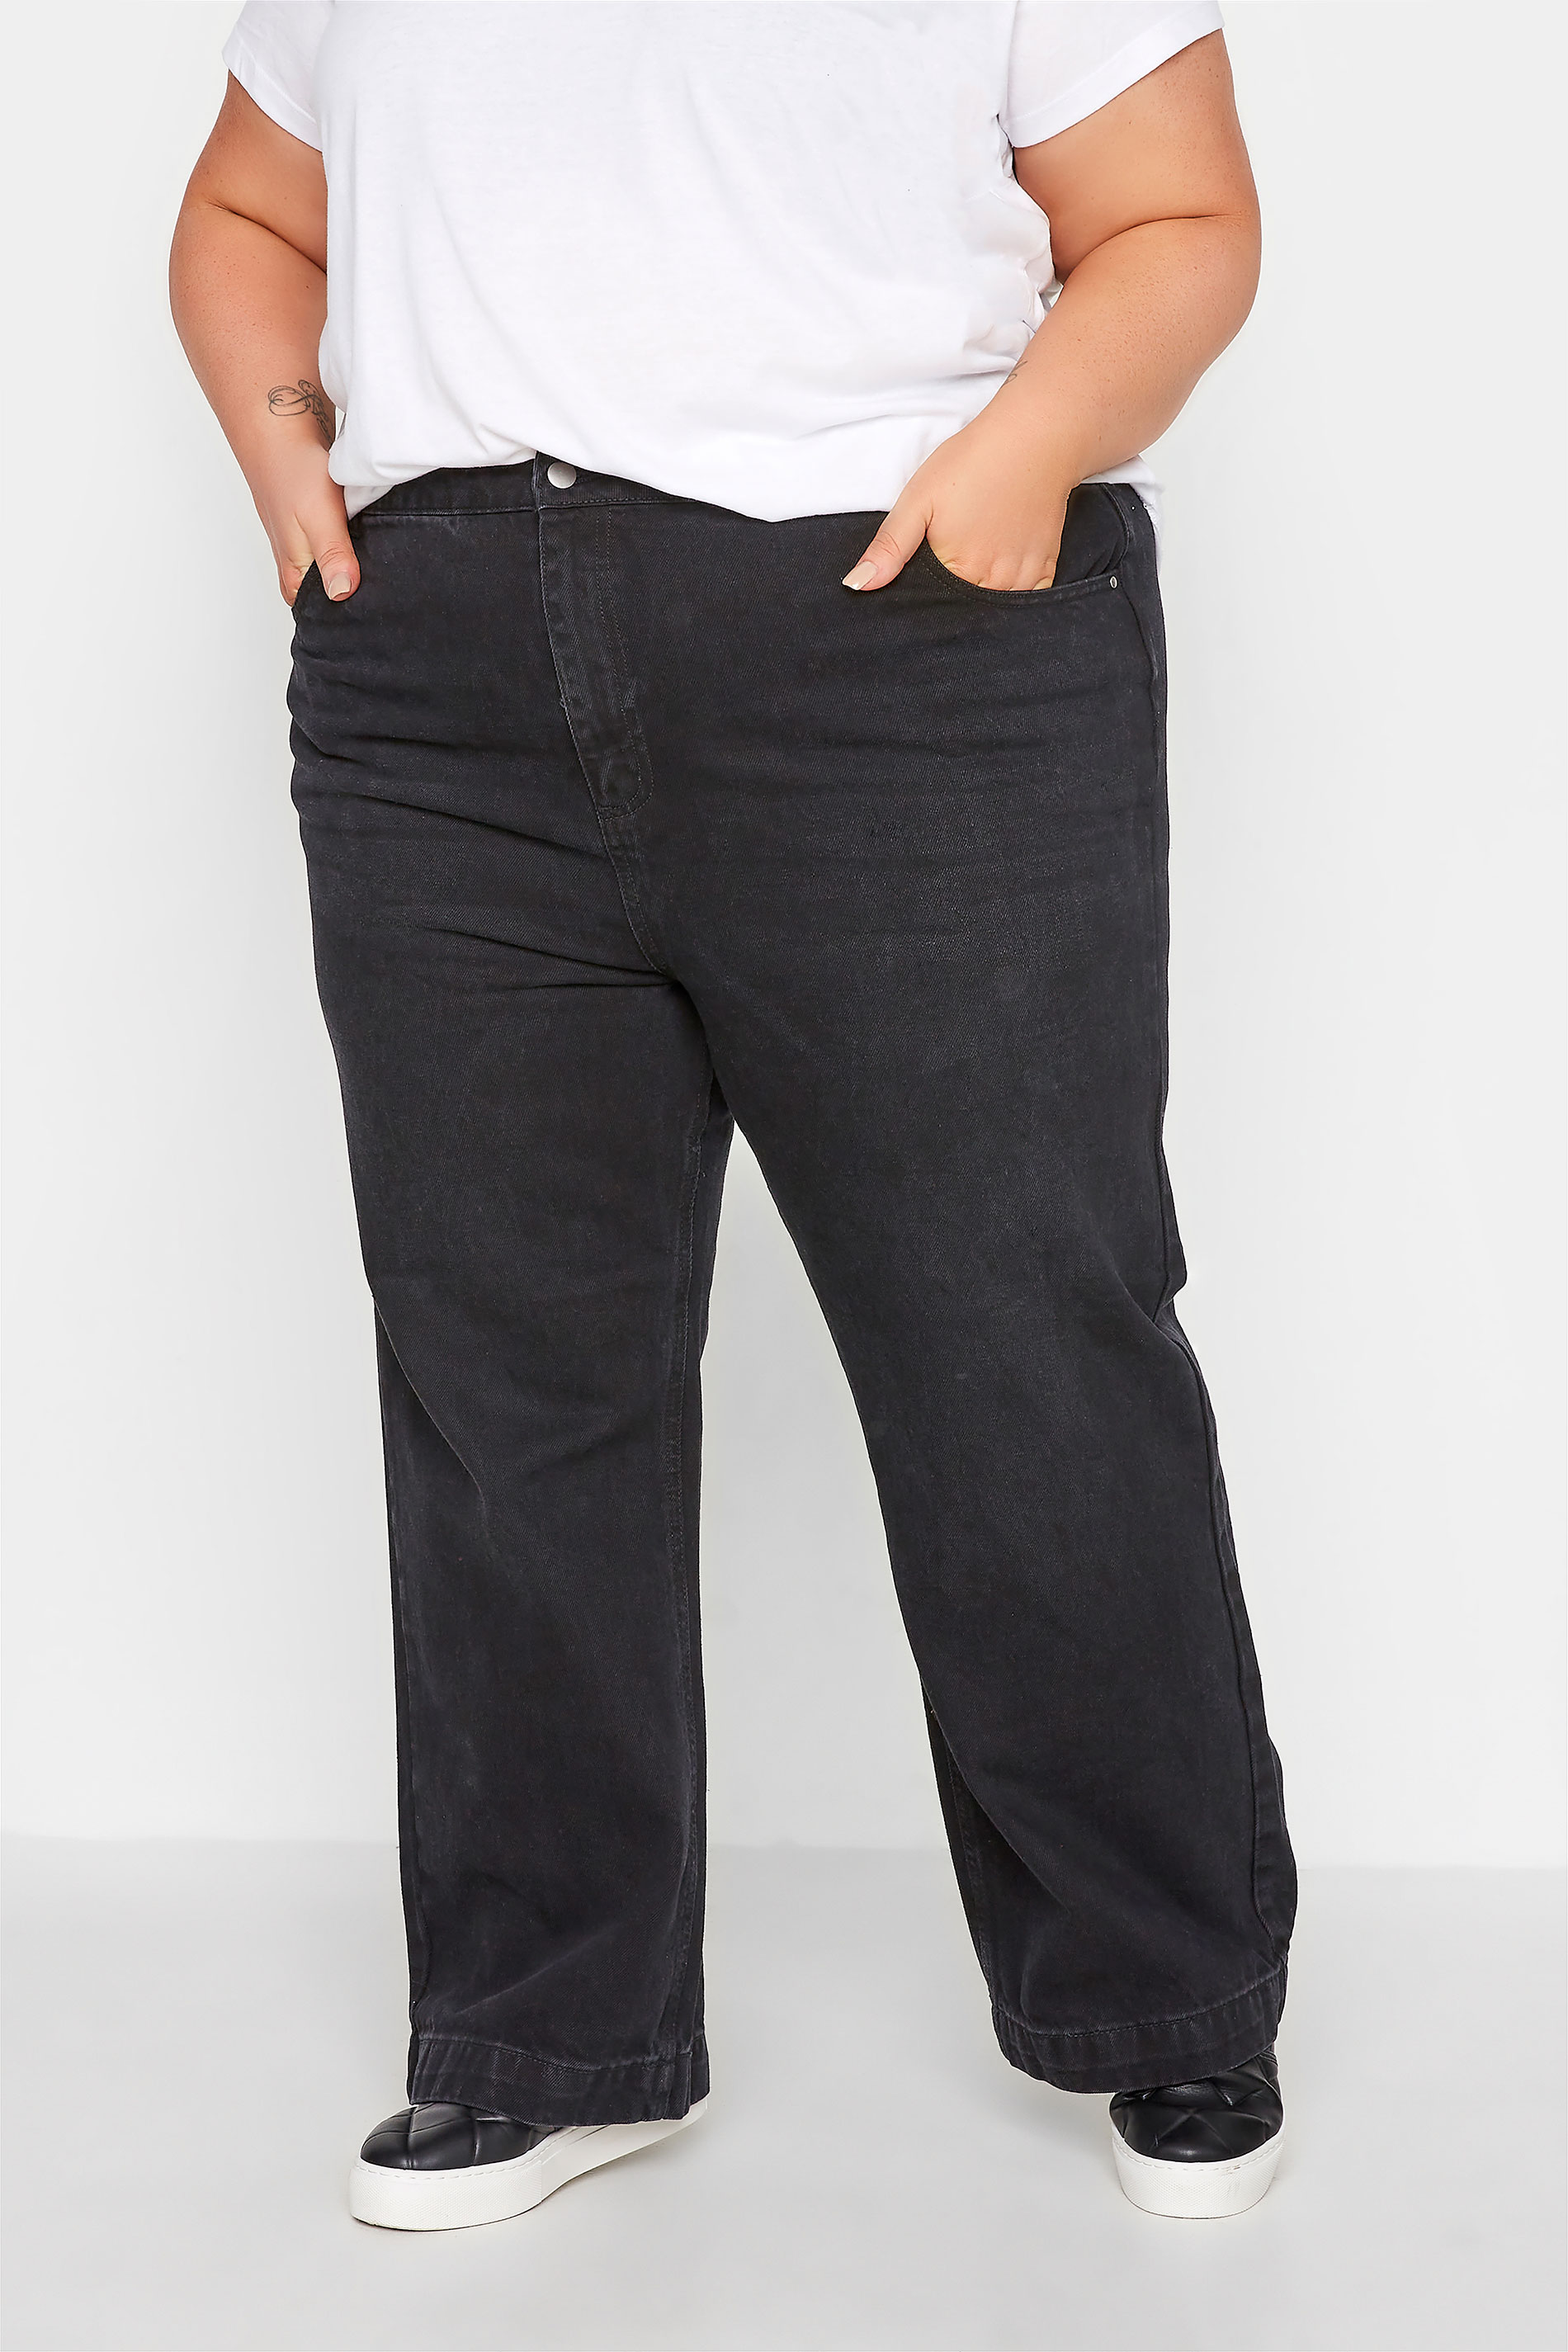 Plus Size Black Wide Leg Jeans | Yours Clothing 1